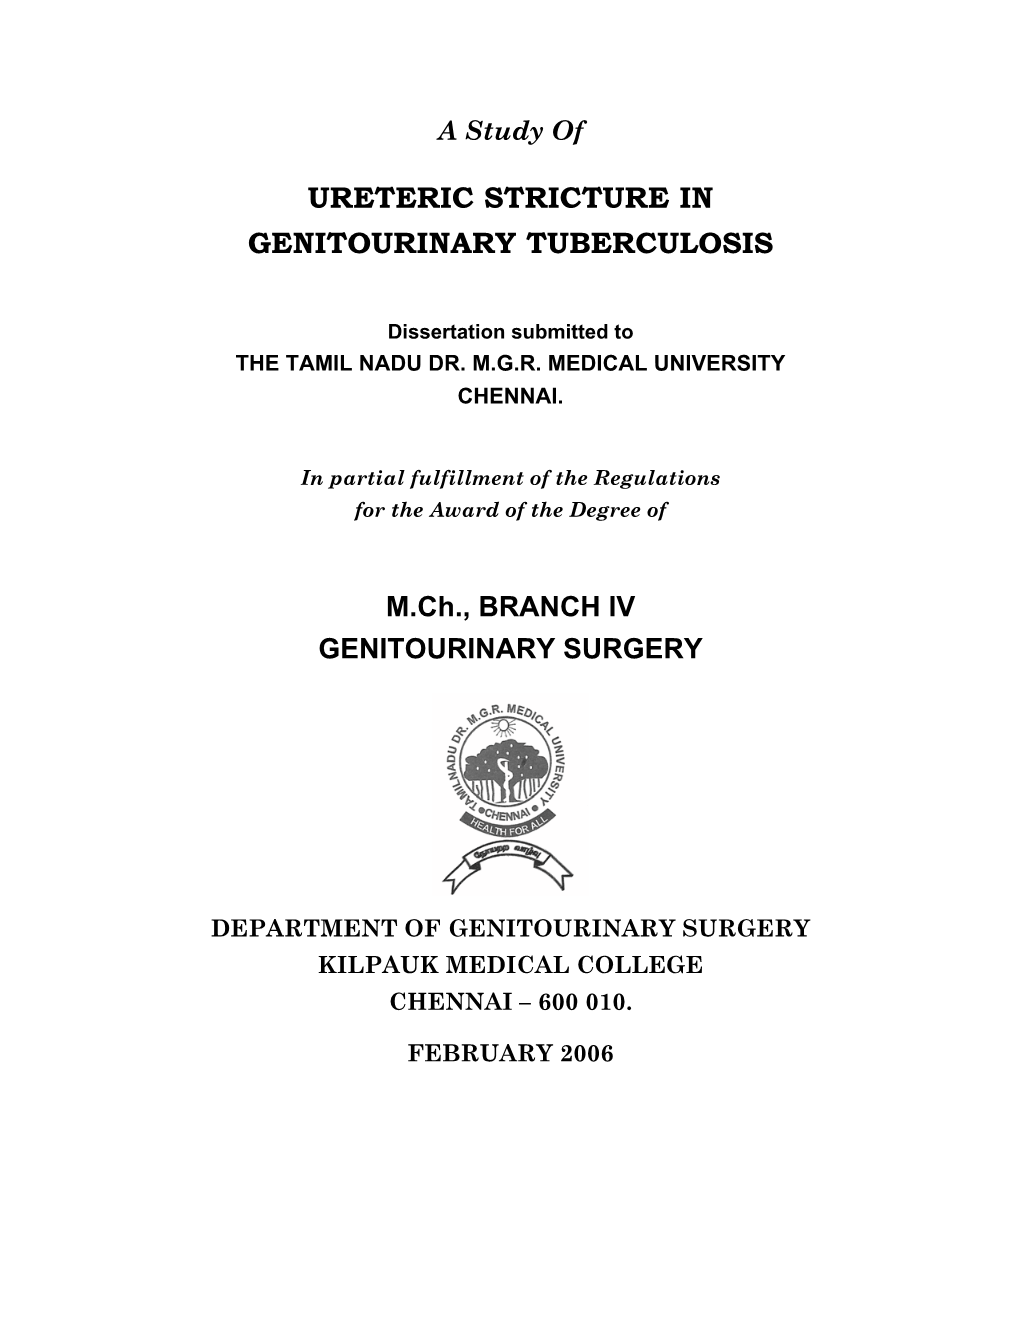 Ureteric Stricture in Genitourinary Tuberculosis